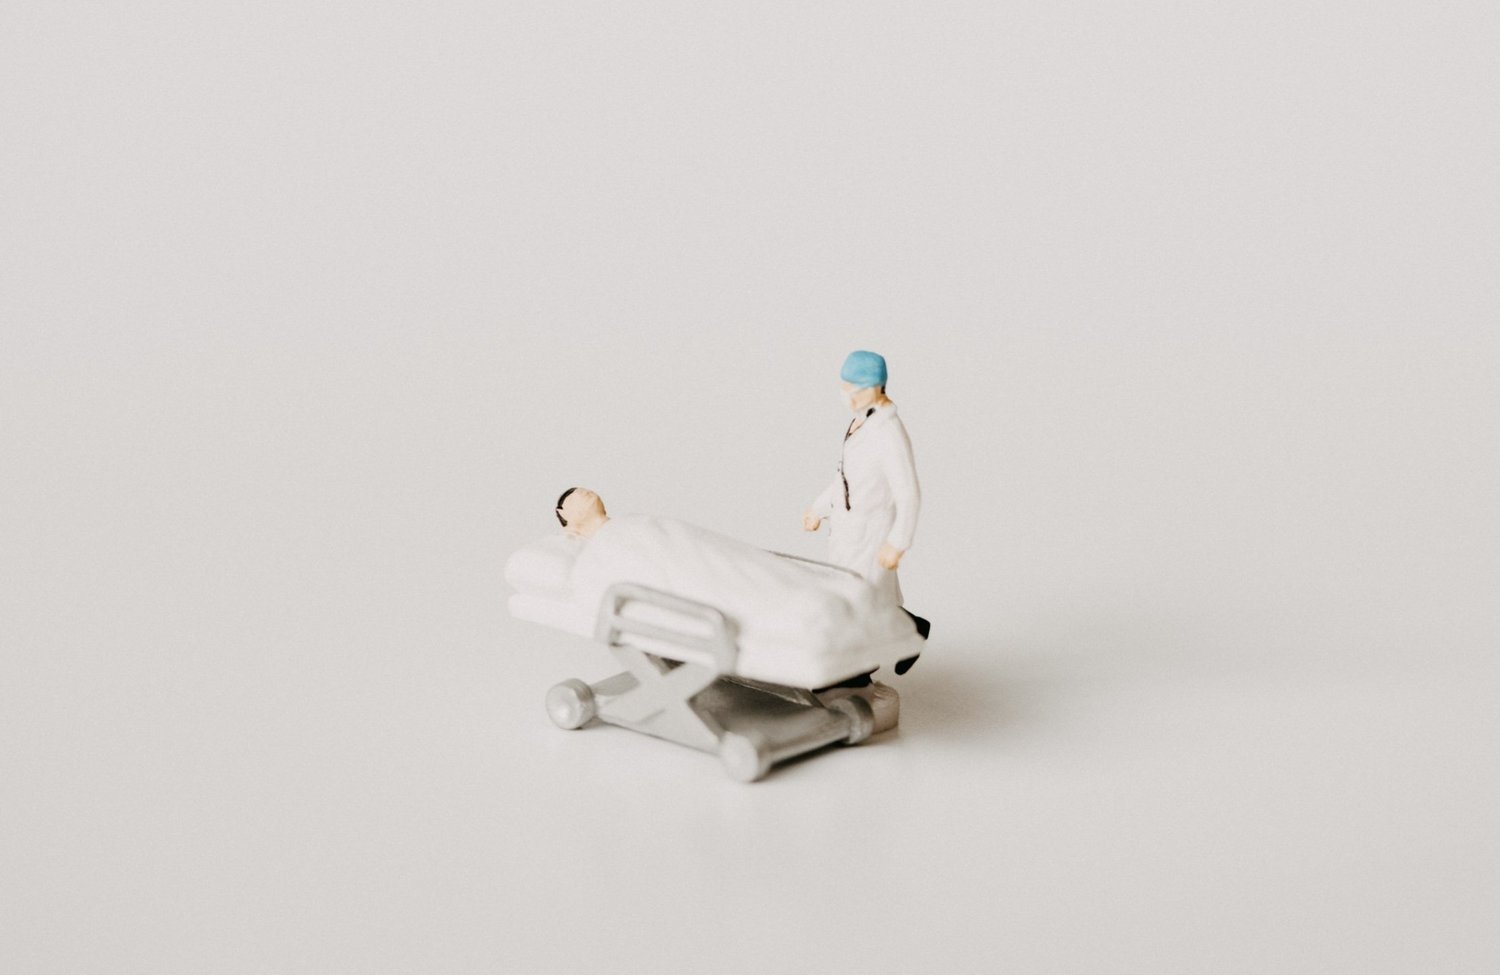 surgeon and patient figurine